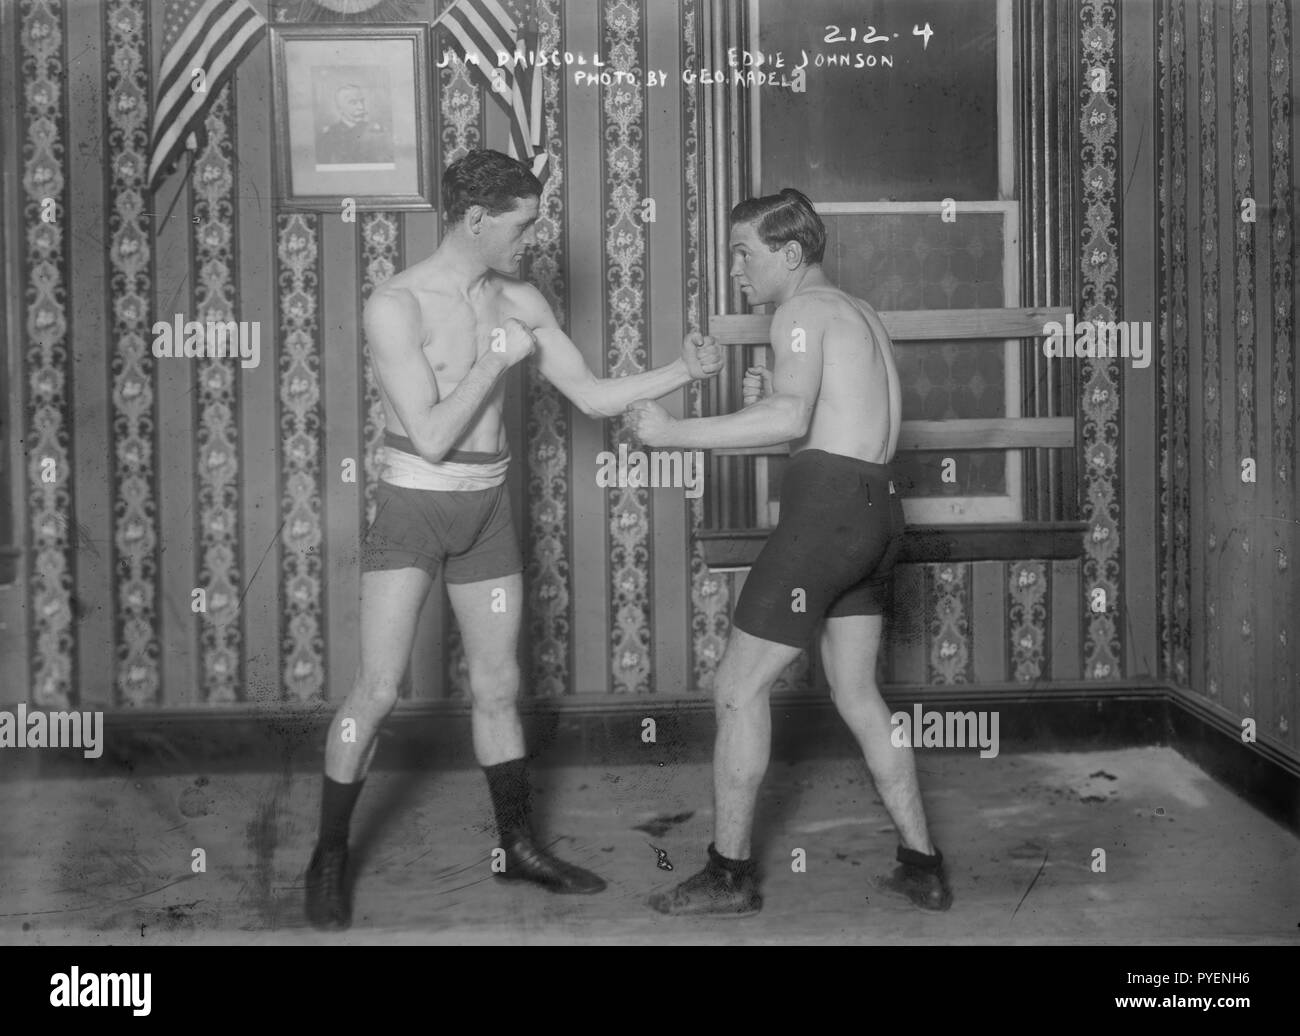 Boxer Peerless Jim 'Jem' Driscoll (1880-1925), nacido en Cardiff, Reino Unido, boxeaba con Eddie Johnson en 1908/1909 al boxeo en EE.UU. en gira. Foto de stock